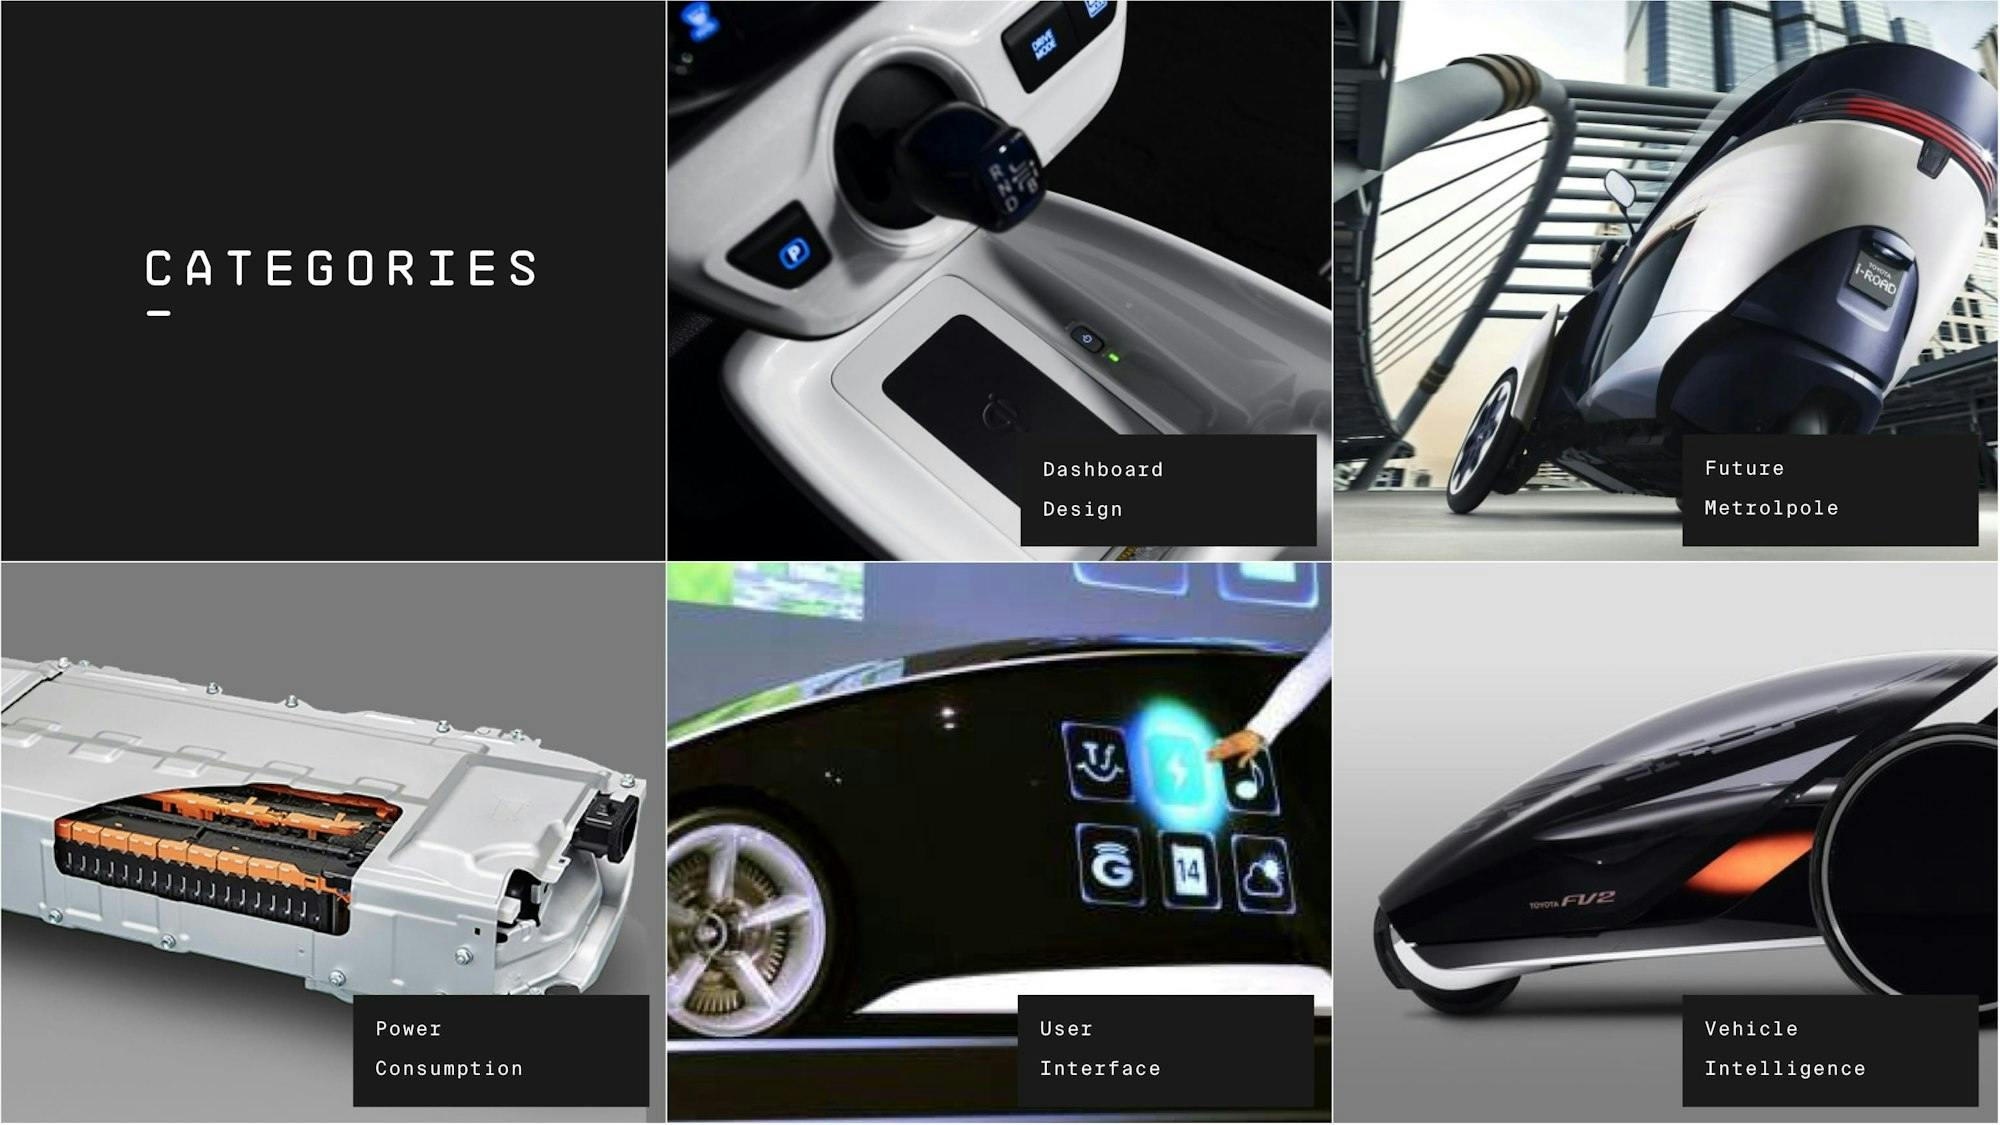 Five Toyota Next categories - Dashboard Design, Future Metropolis, Power Consumption, User Interface, Vehicle Intelligence